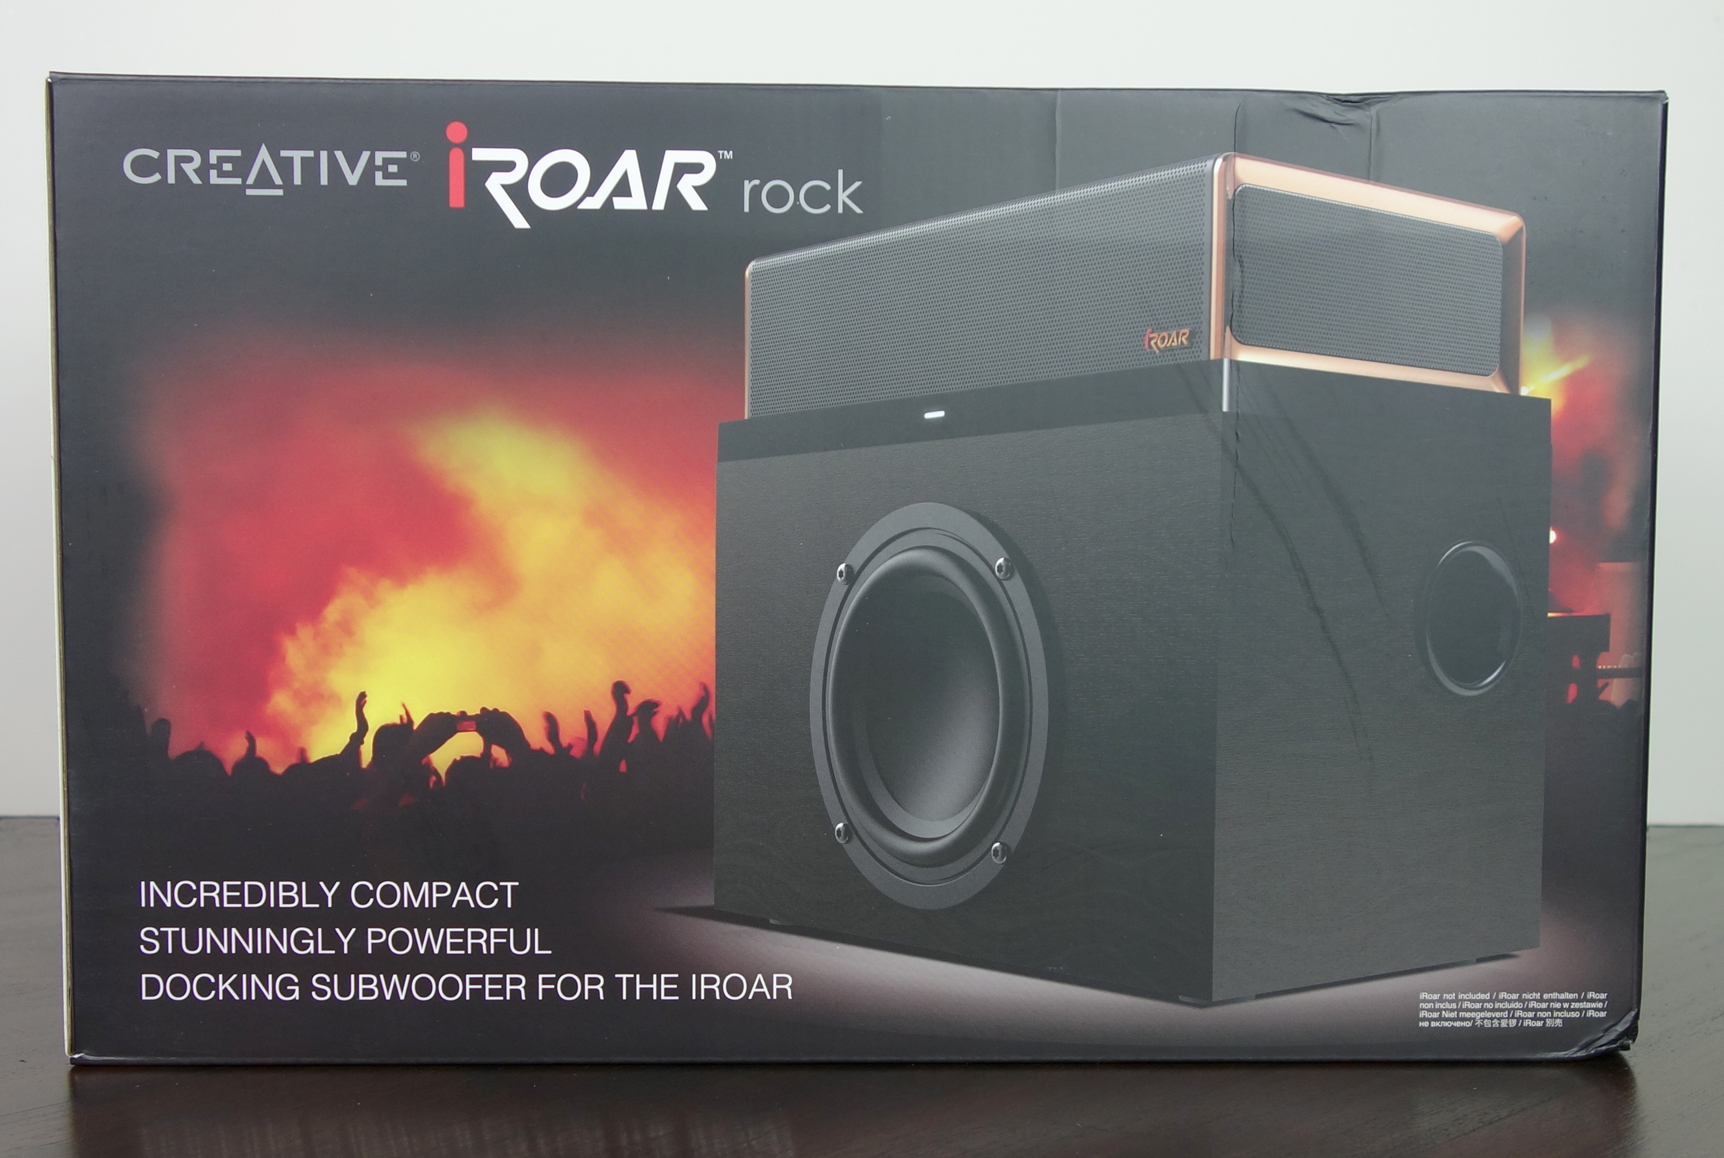 Creative iRoar Rock Docking Subwoofer box